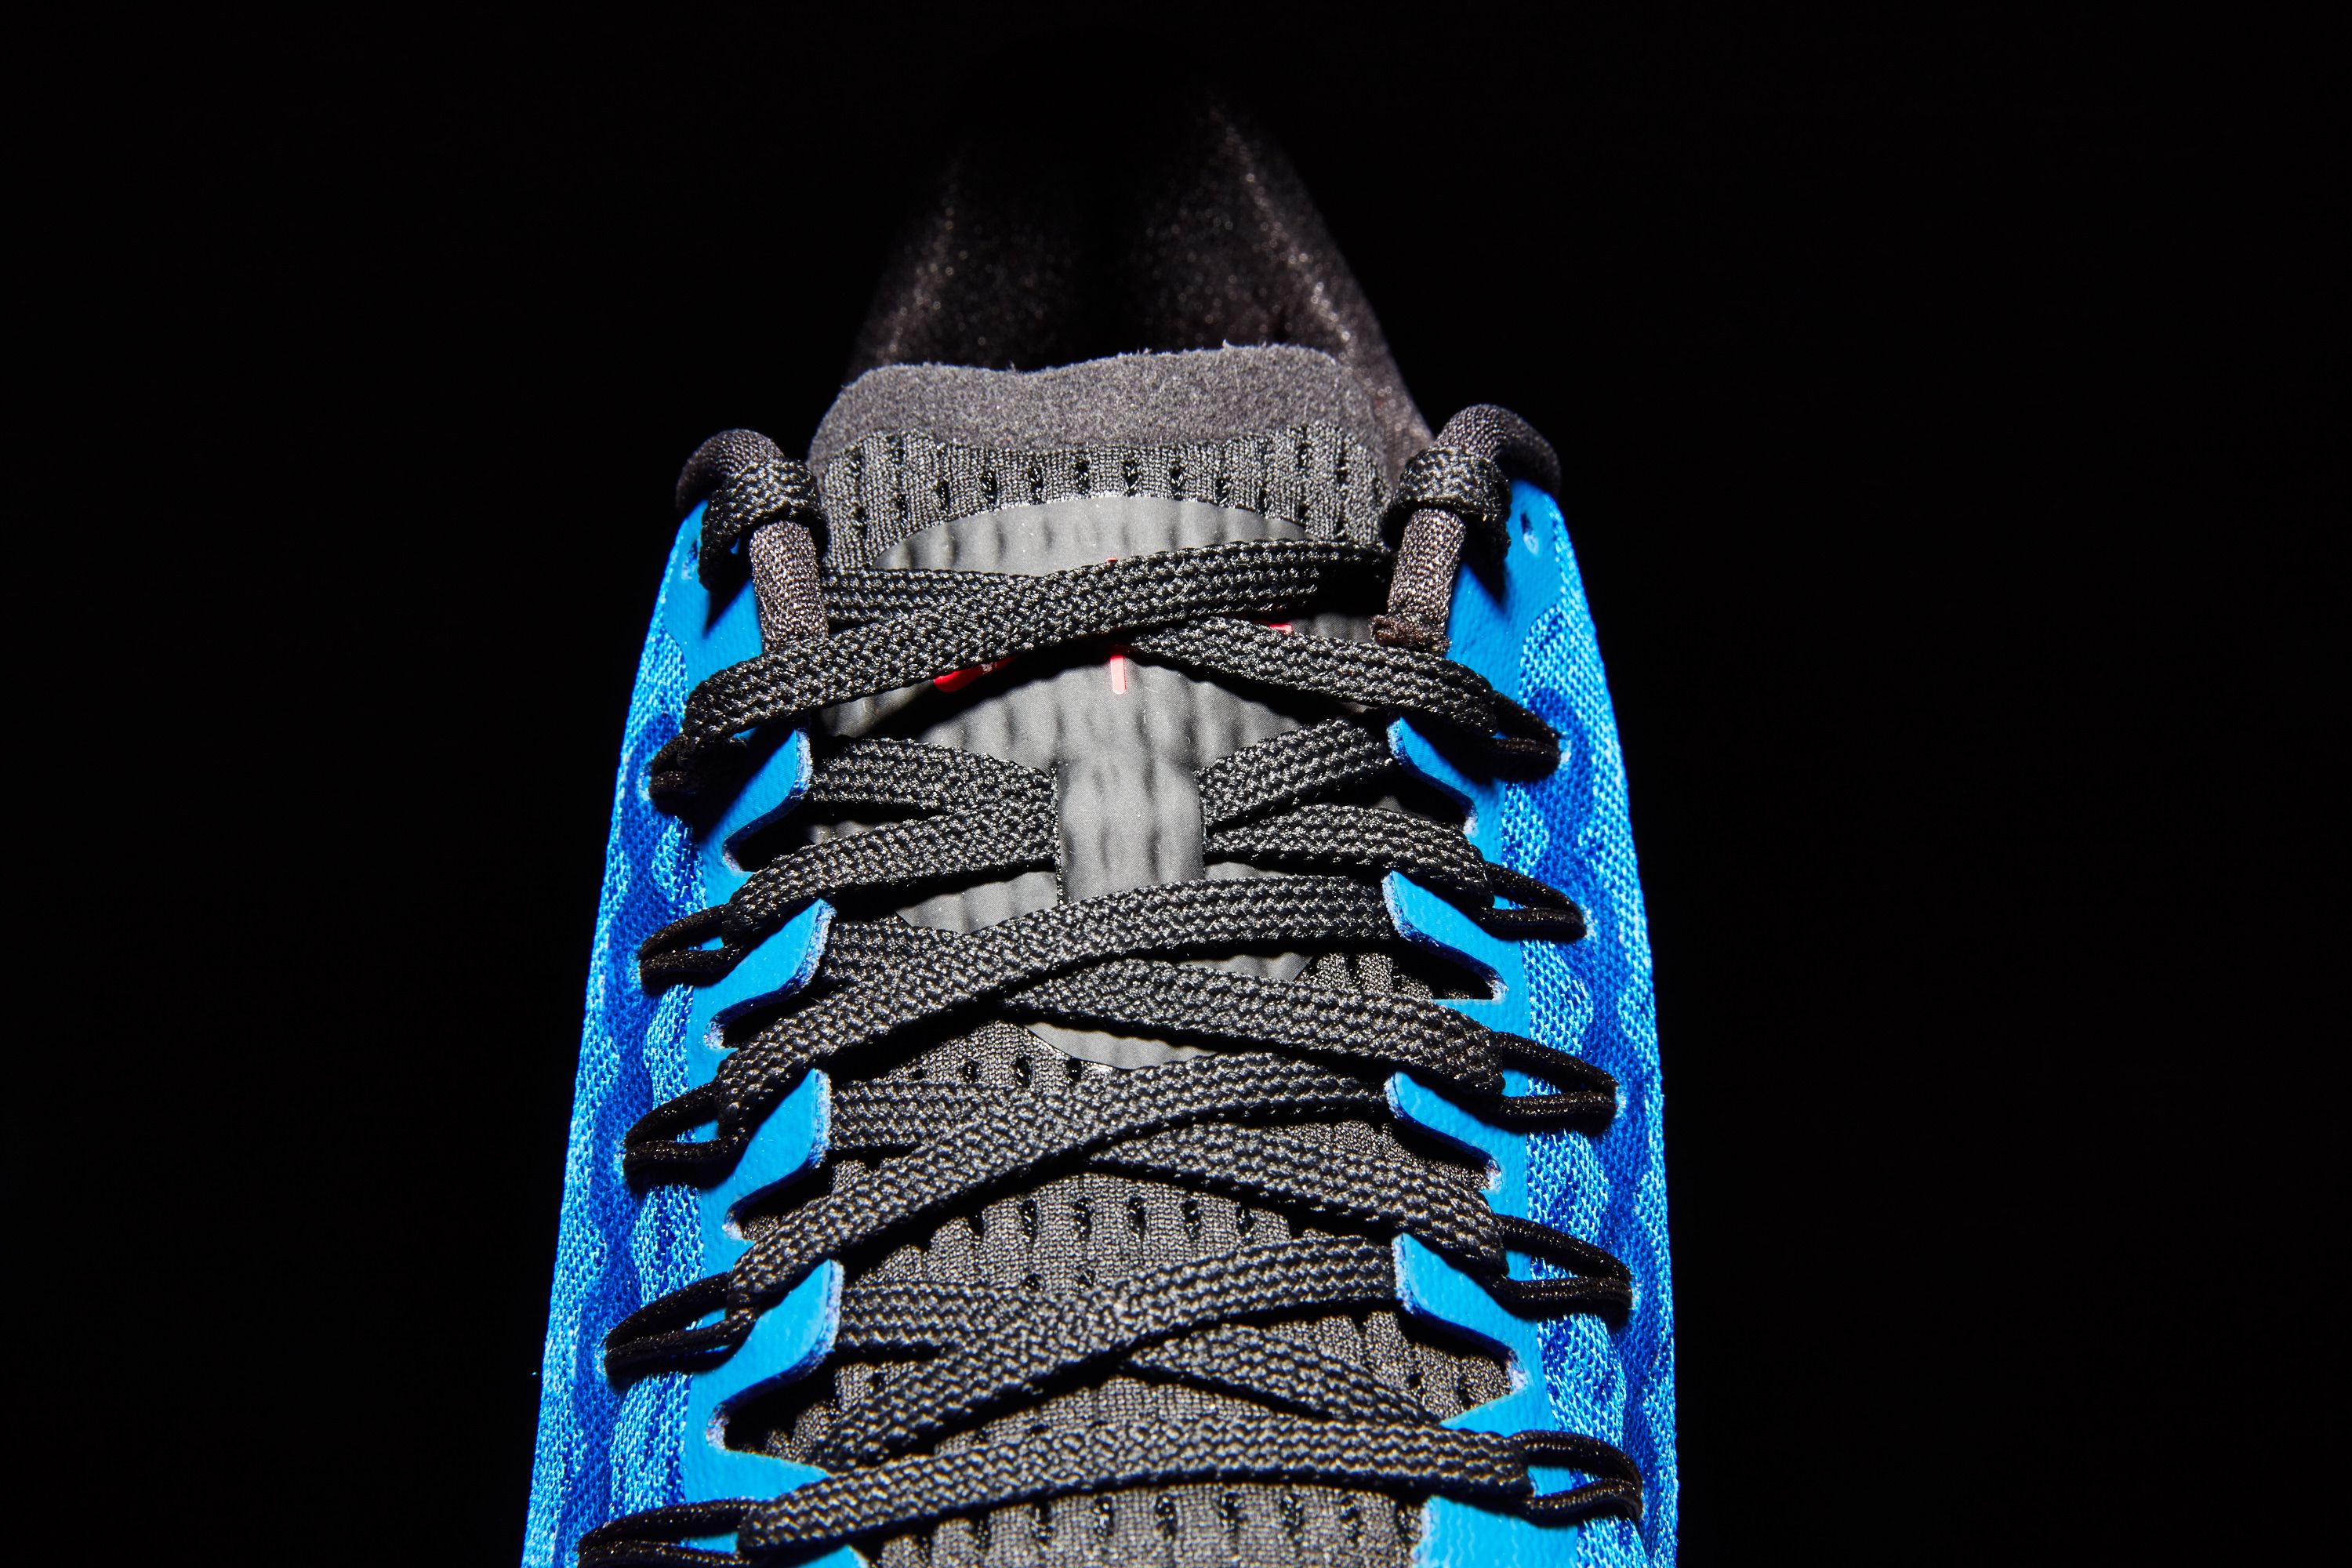 Nike Air Zoom Vomero 14 | Shoe Reviews